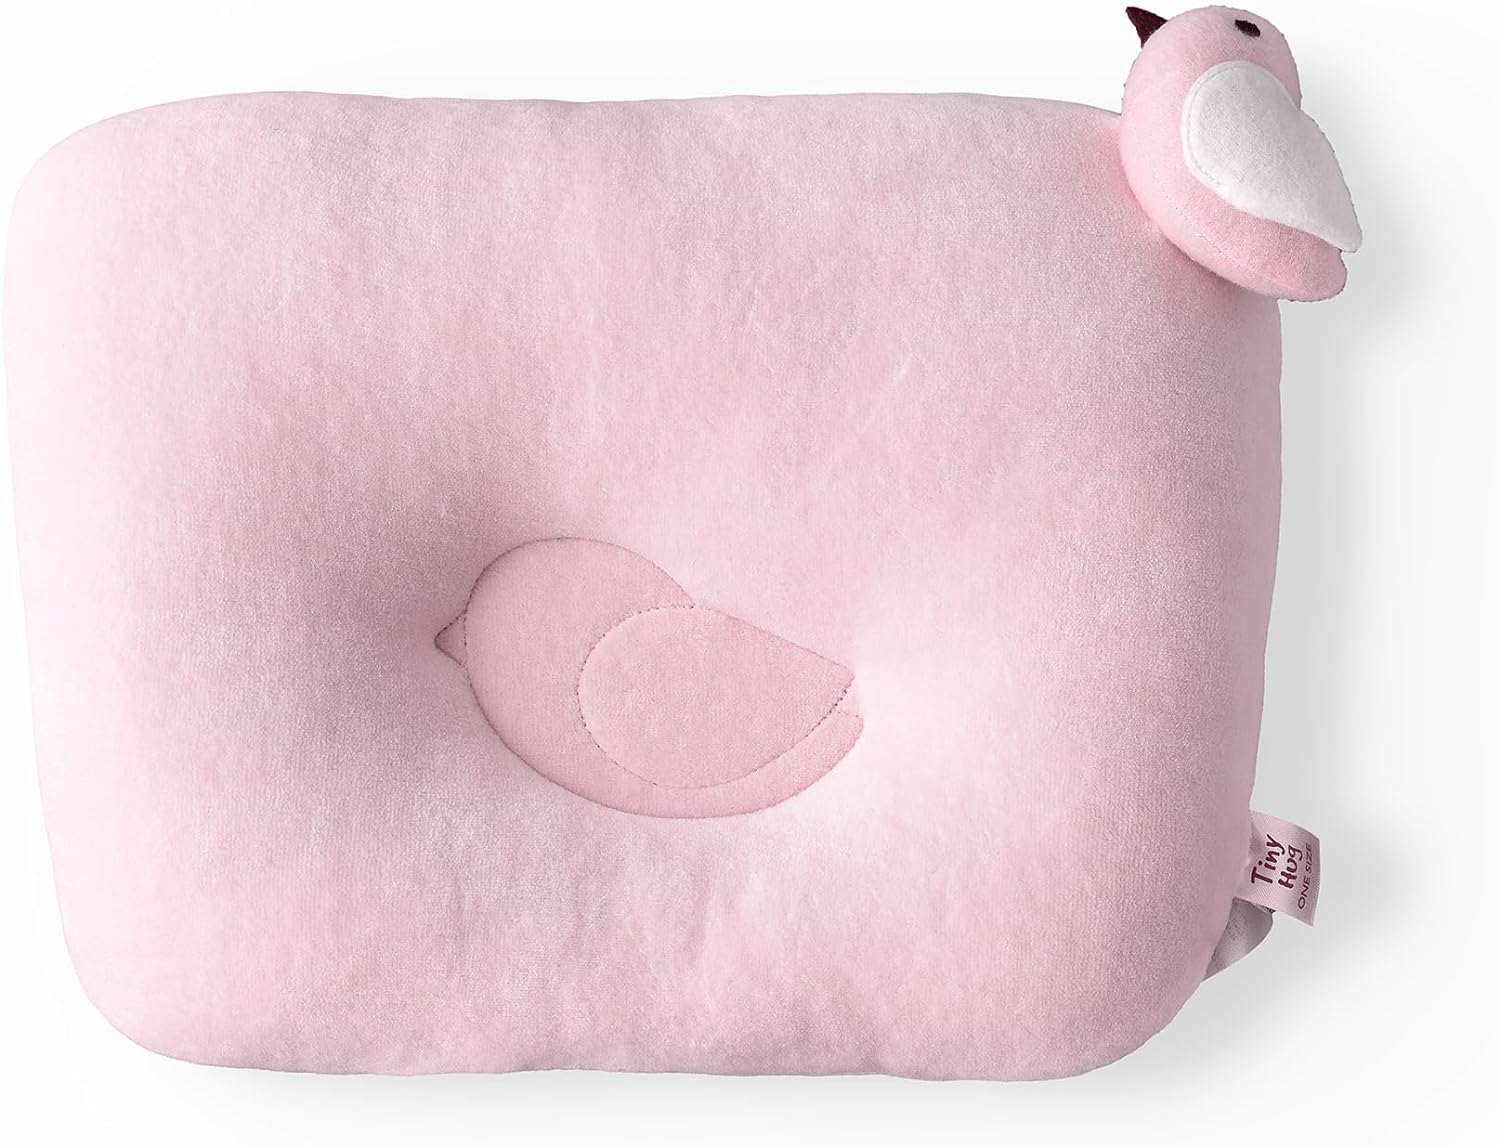 Tiny Hug Baby Pillow - Pink - Laadlee